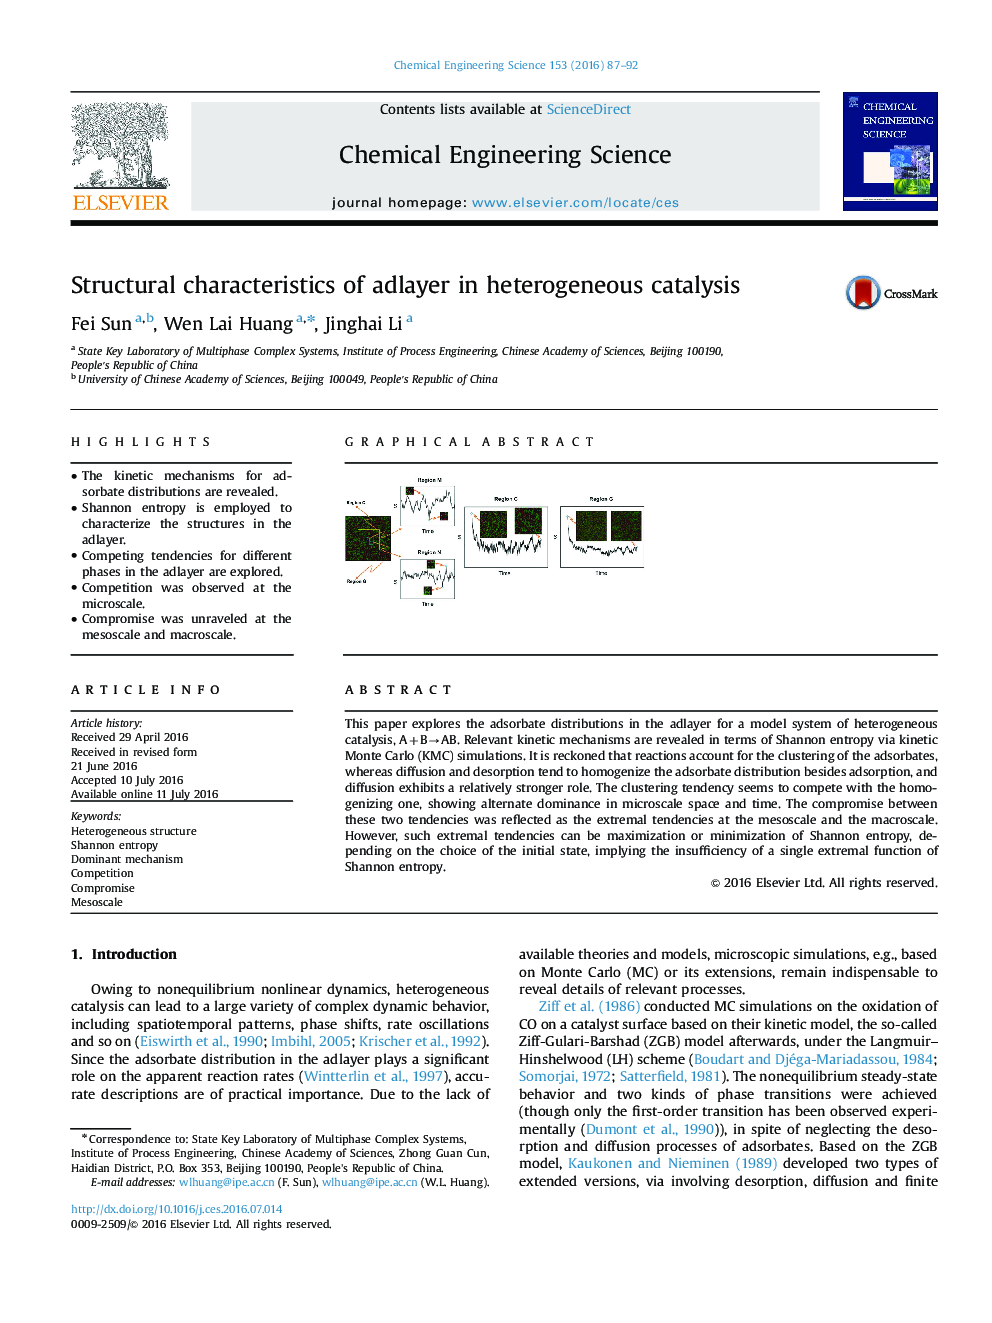 Structural characteristics of adlayer in heterogeneous catalysis